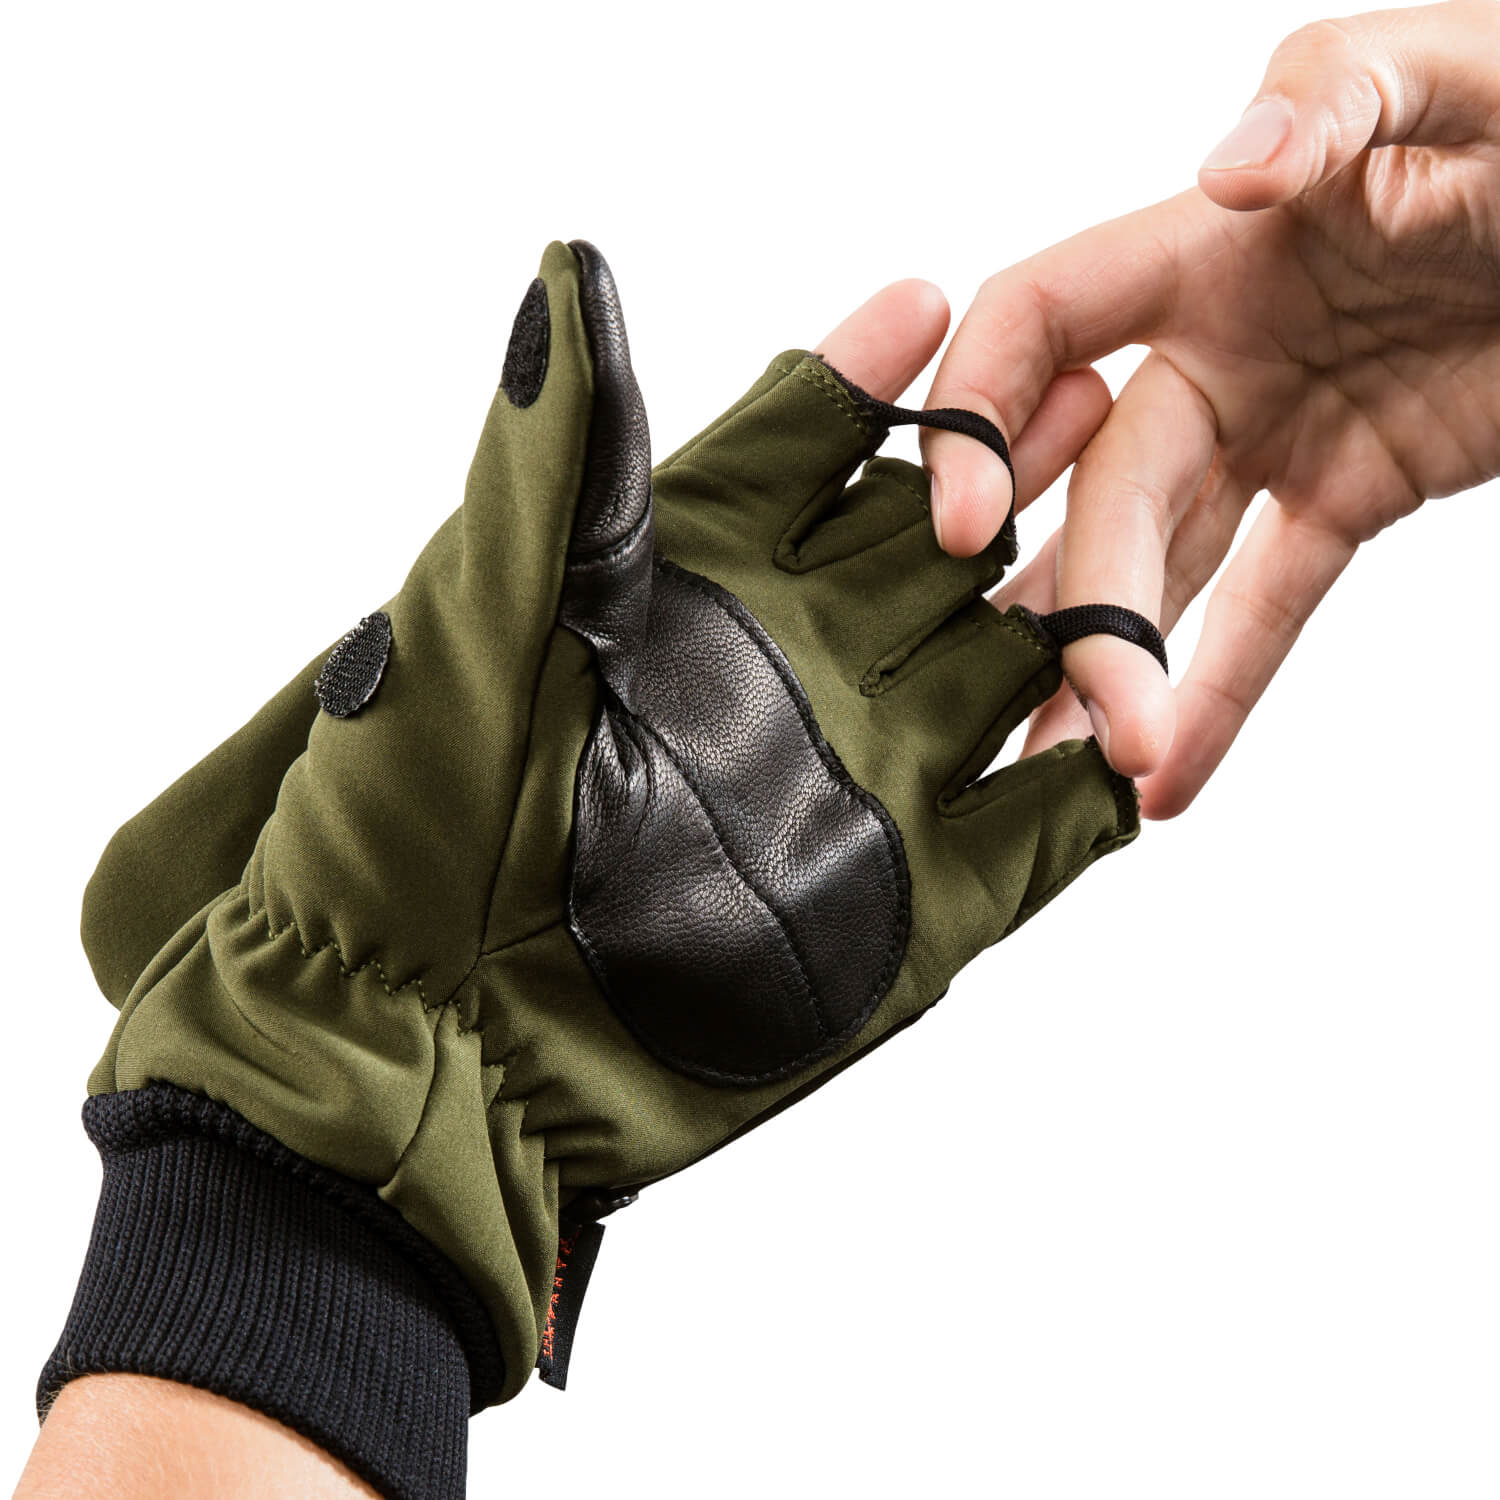 The Heat Company Heat 2 Softshell Mittens/Gloves (Size 9, Black)